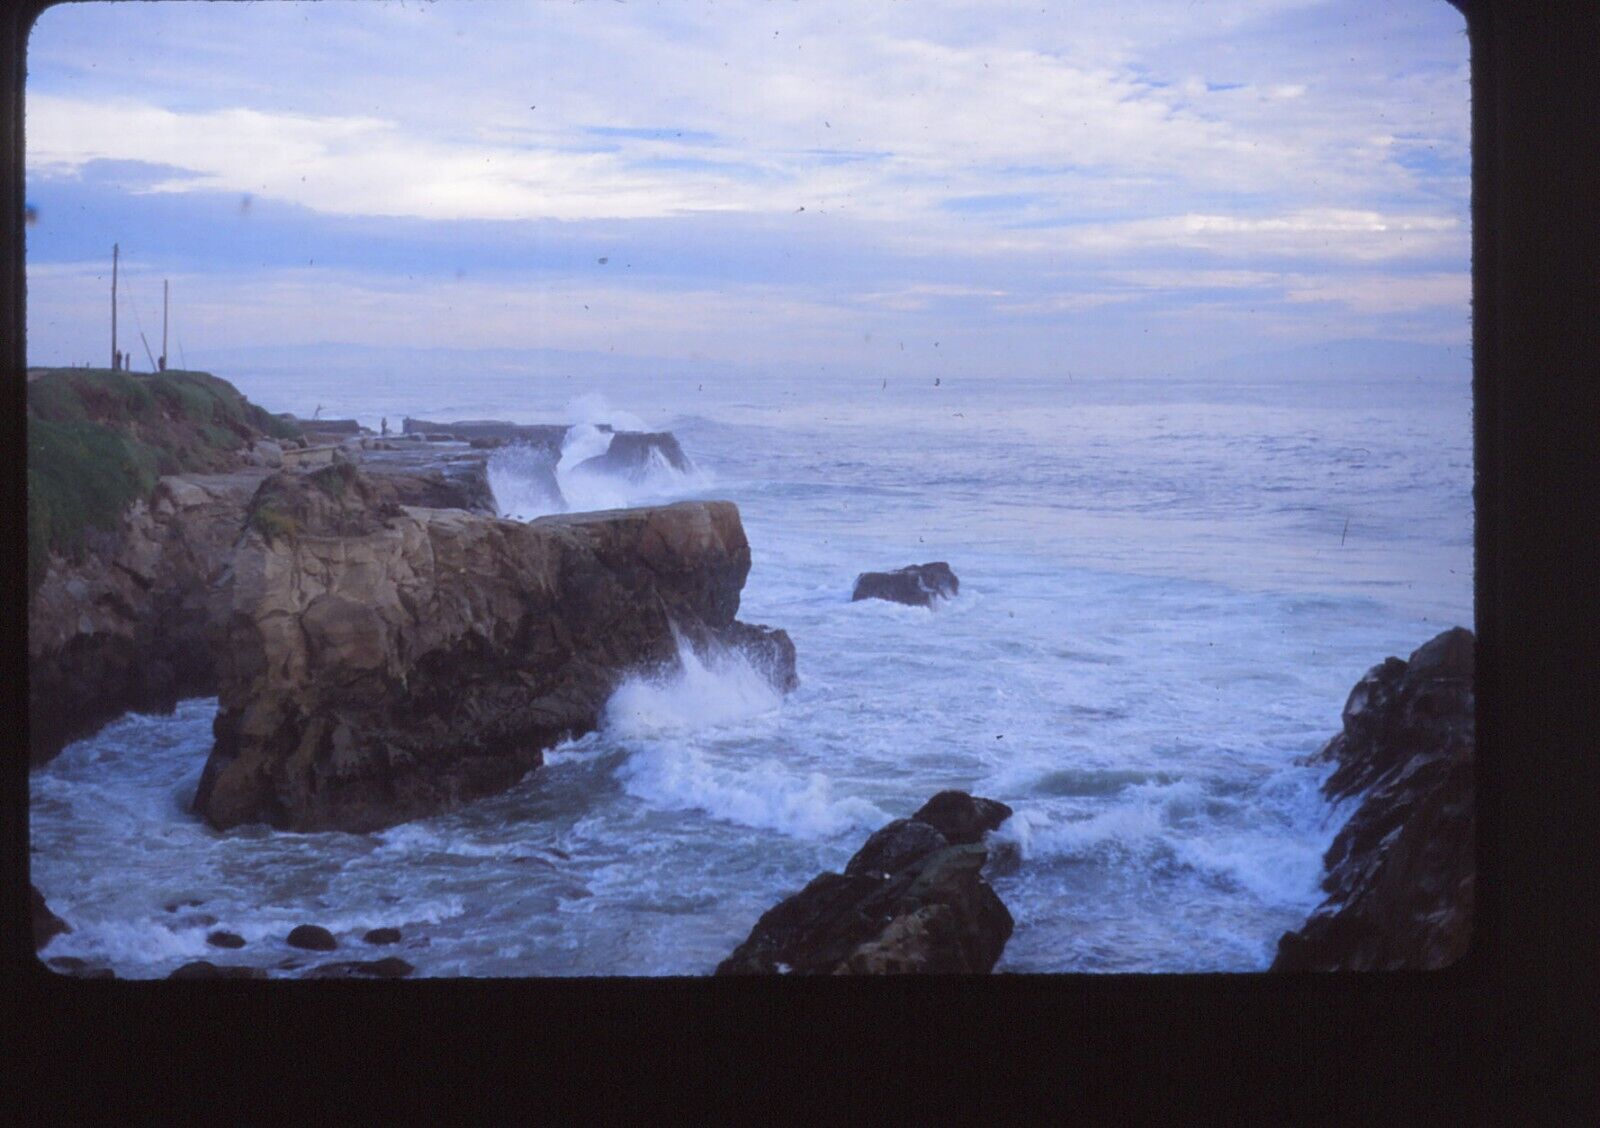 Vintage Film Slide 1979 West Cliff Drive Santa Cruz California